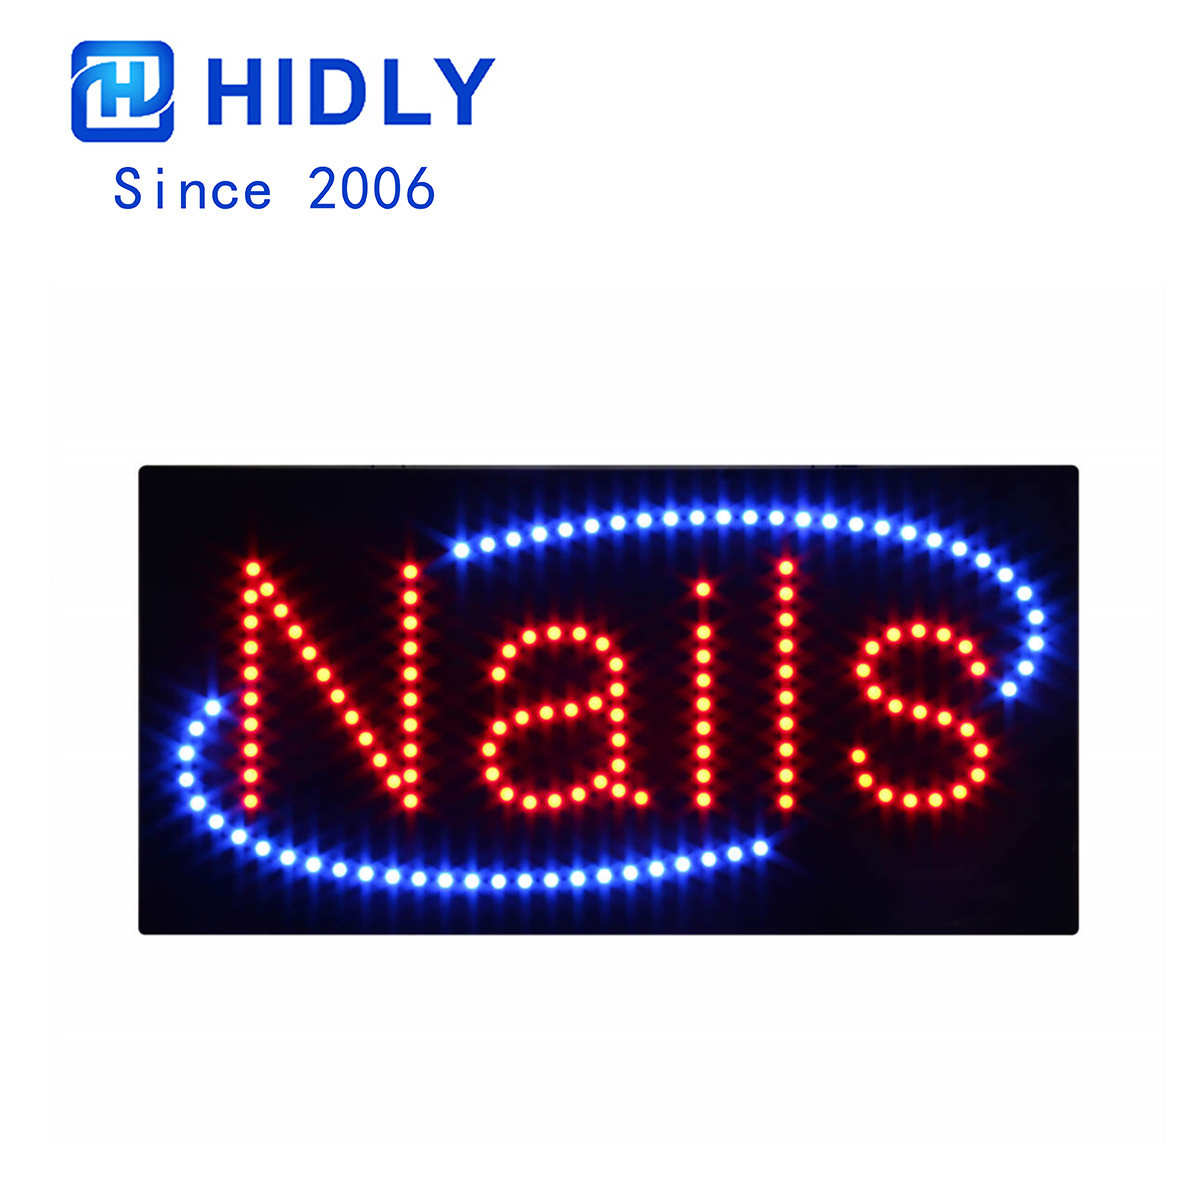 Nails window led sign